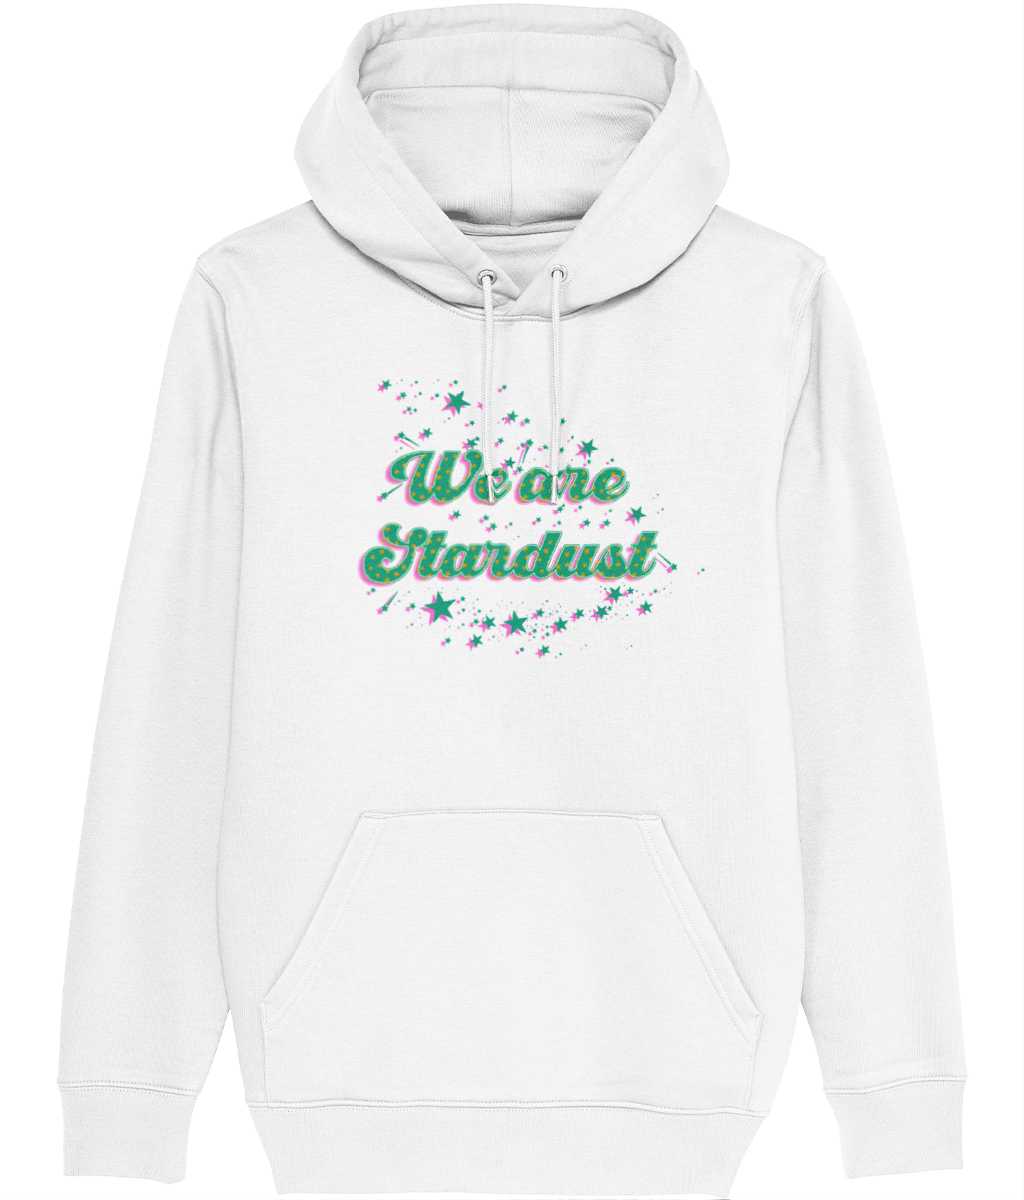 We are Stardust hoodie-Emerald print Cherchez La Femme brand